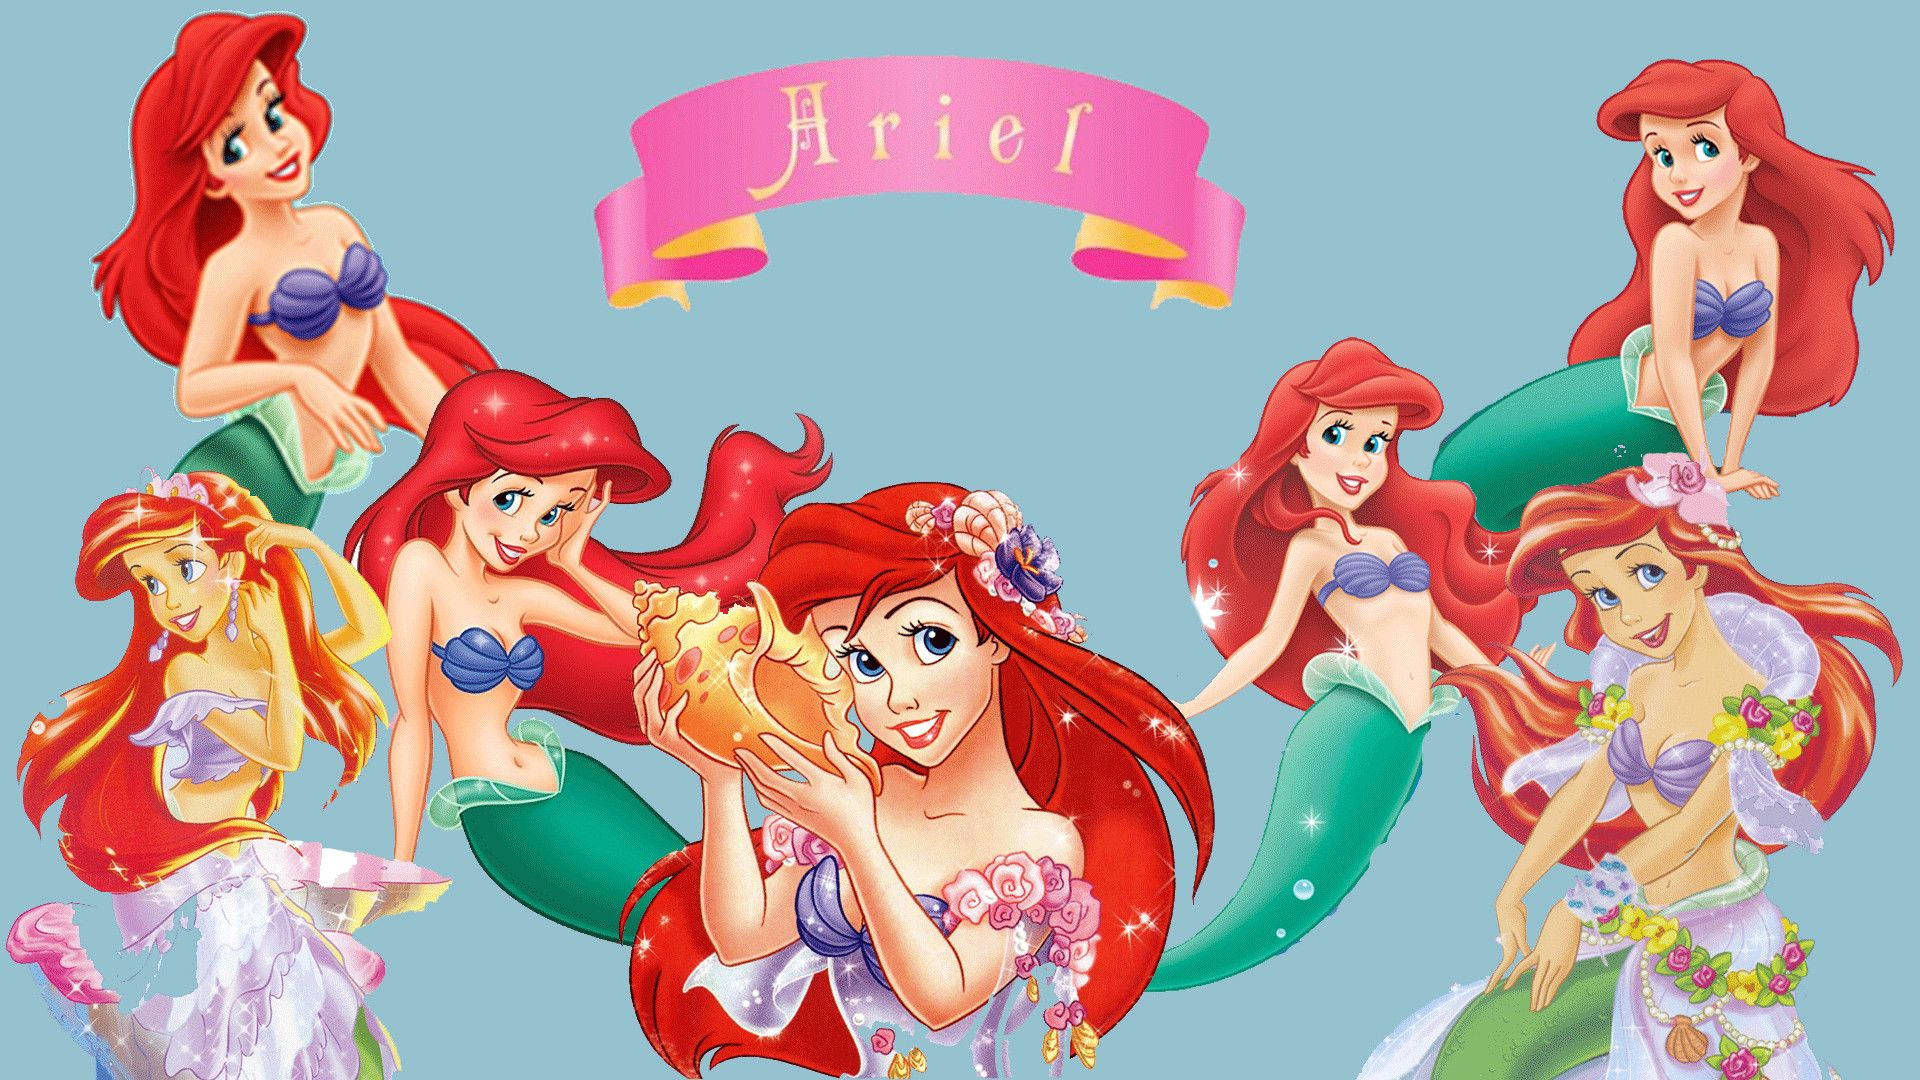 The Little Mermaid Princess Ariel Wallpaper